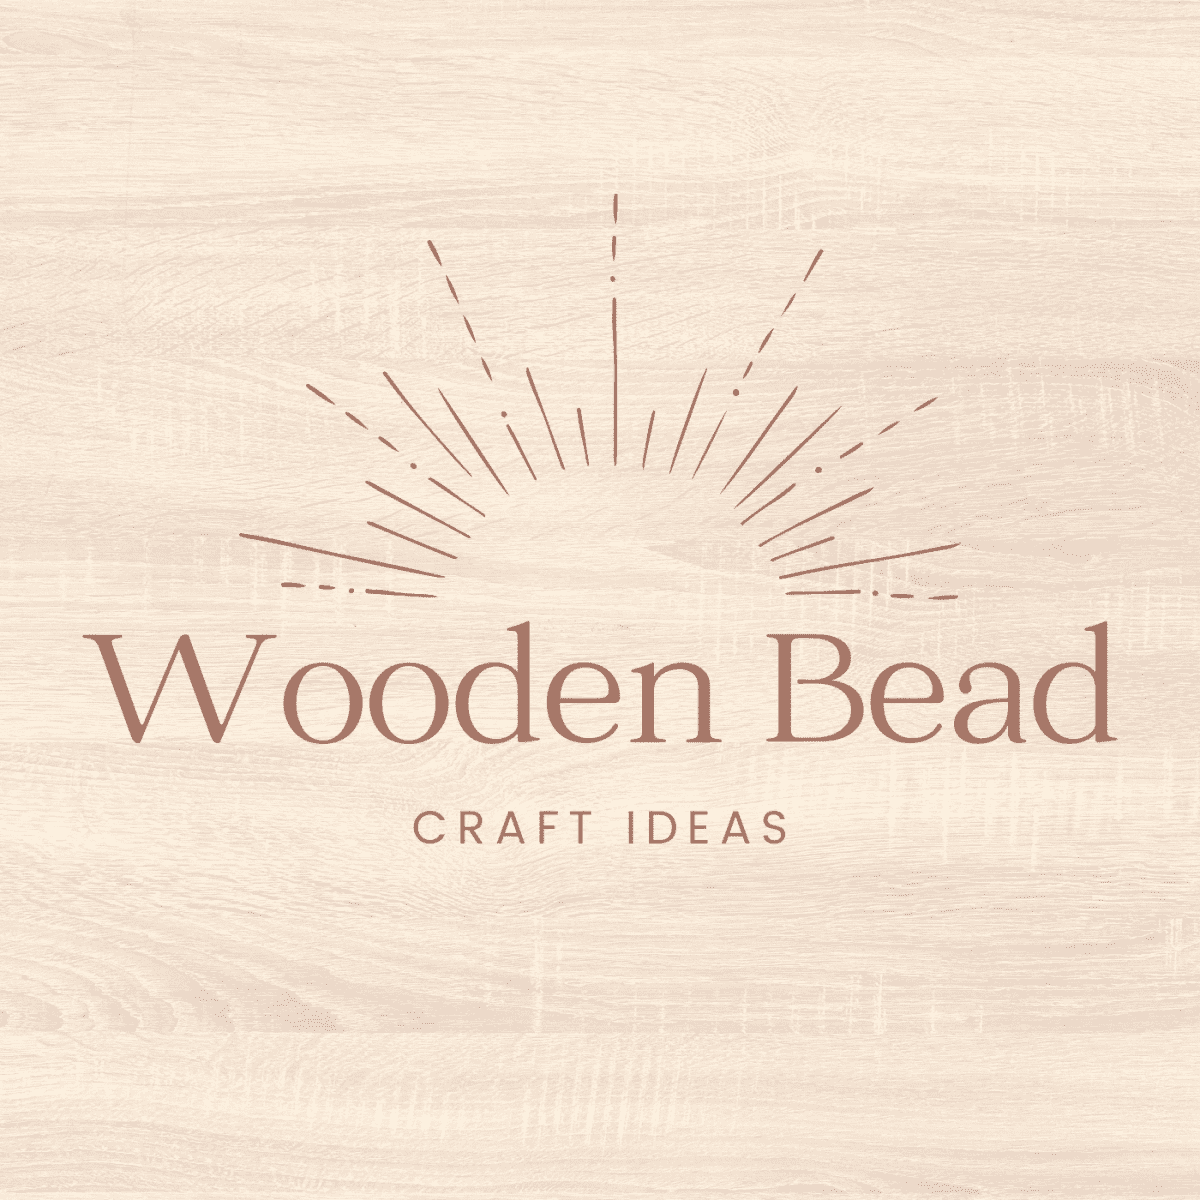 35 Stunning Wooden Bead Craft Projects - FeltMagnet